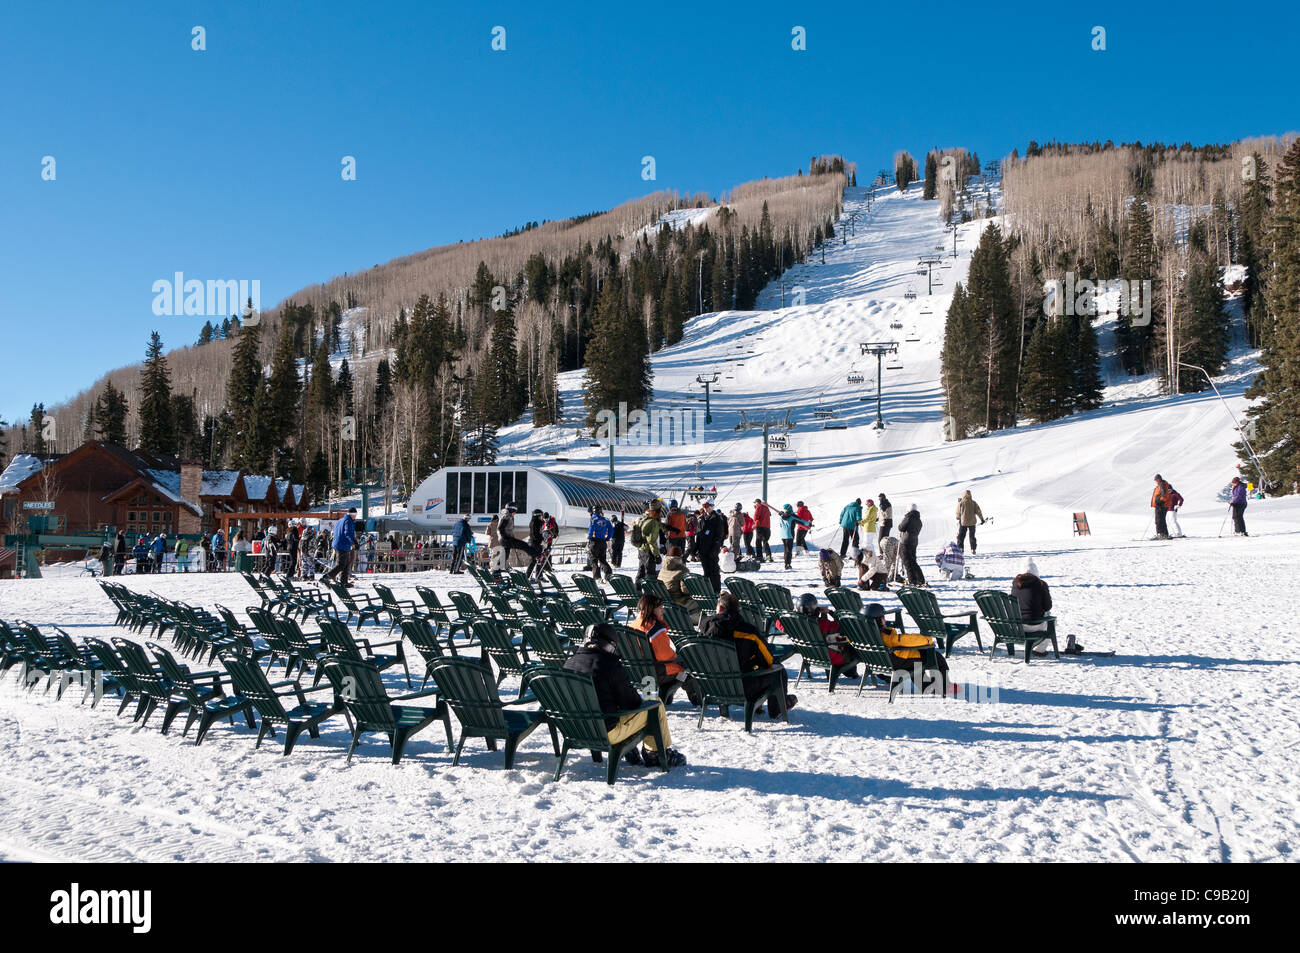 Lower slopes, Durango Mountain Resort - Purgatory, Durango, Colorado. Stock Photo